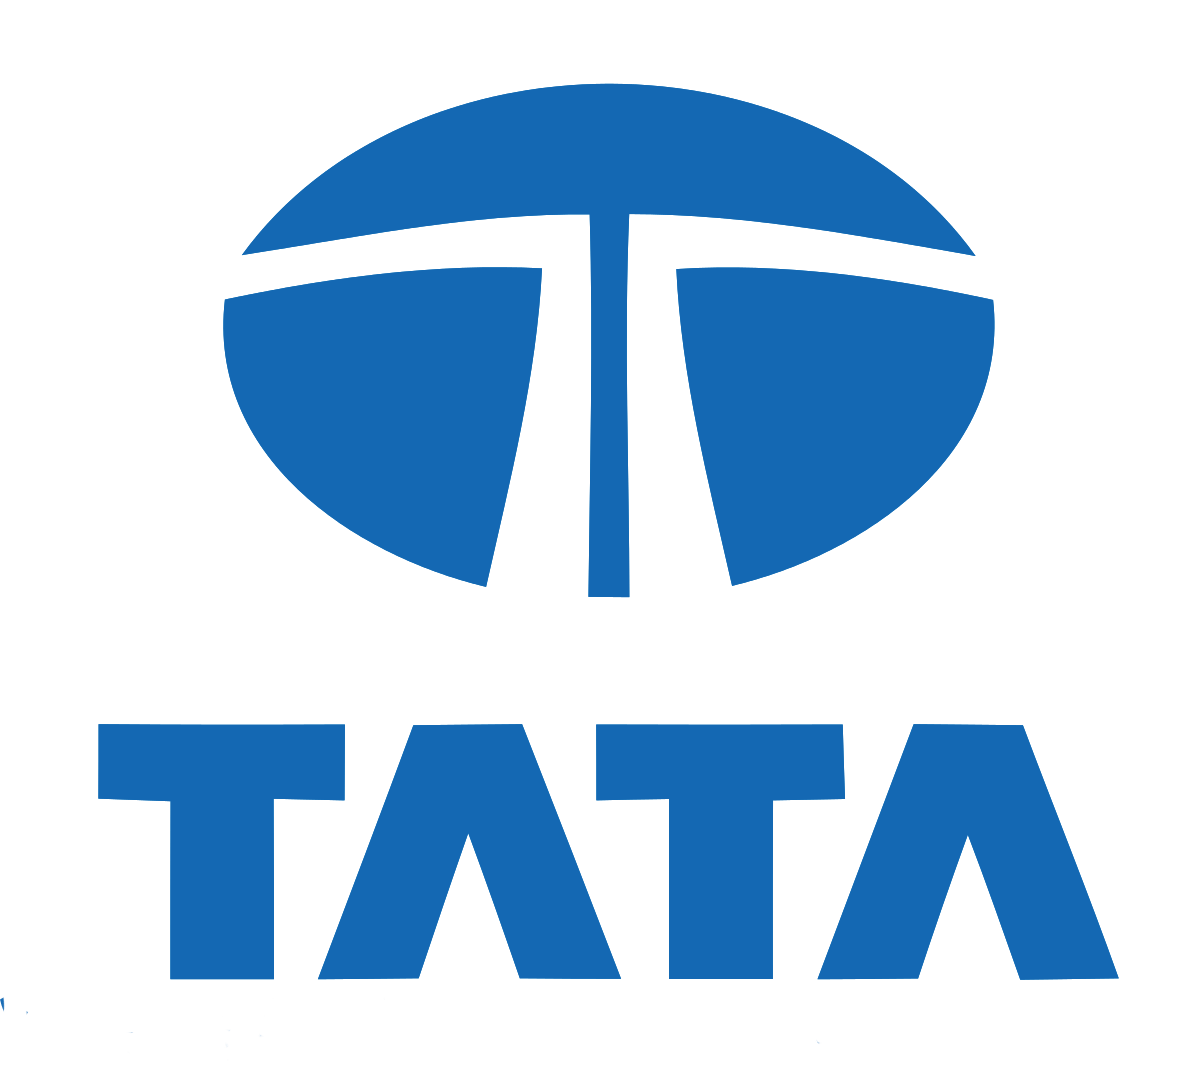 Tata_Group_Logo (002)